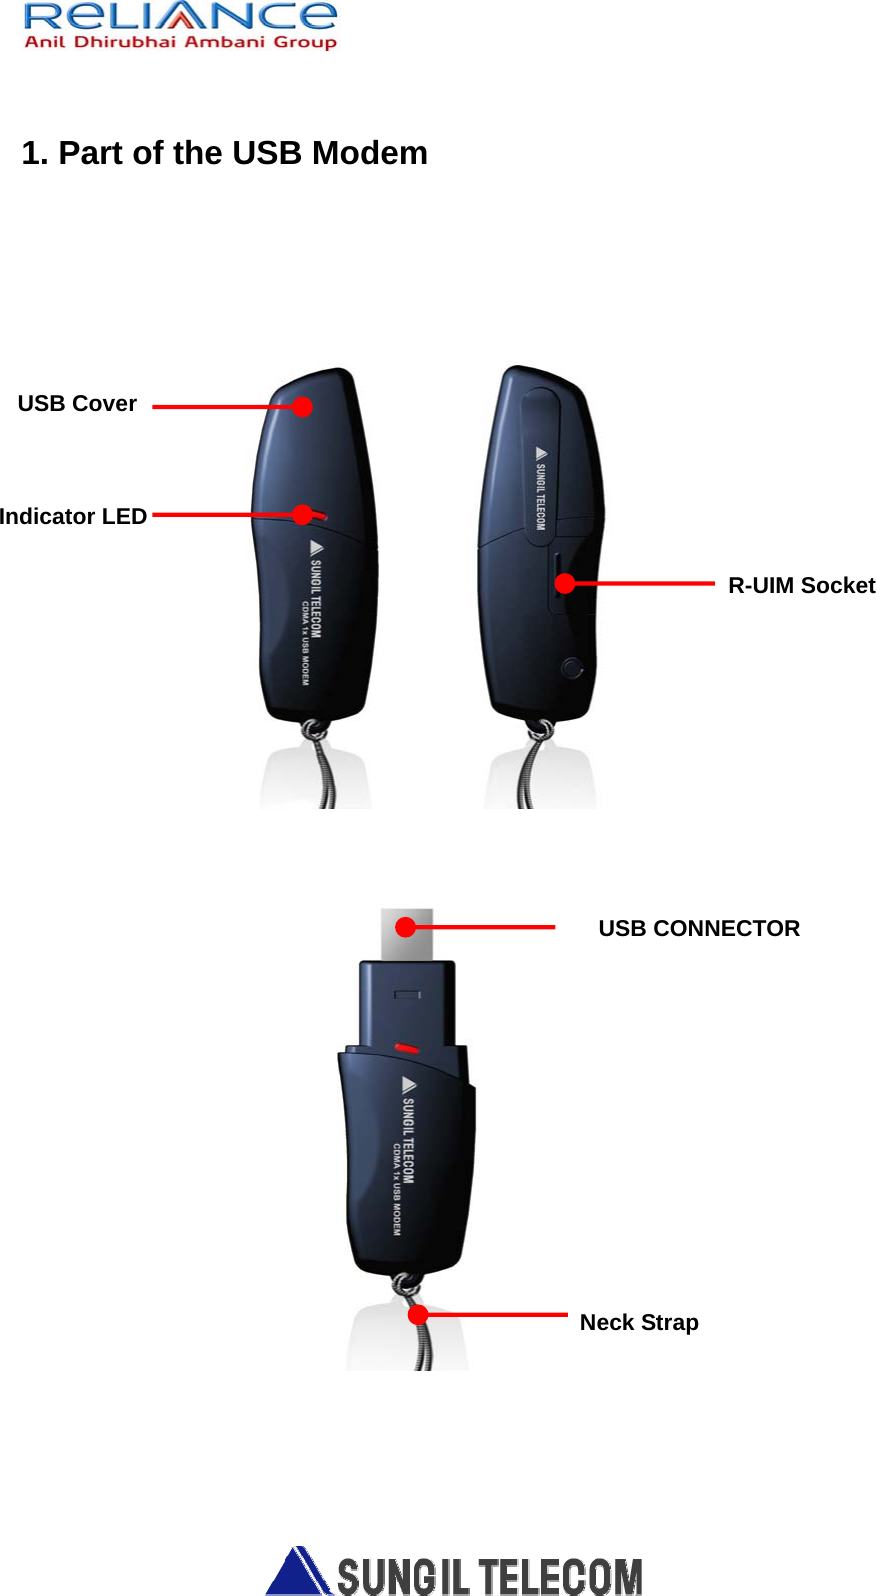   1. Part of the USB Modem                     Indicator LED R-UIM Socket USB CONNECTOR Neck Strap USB Cover 